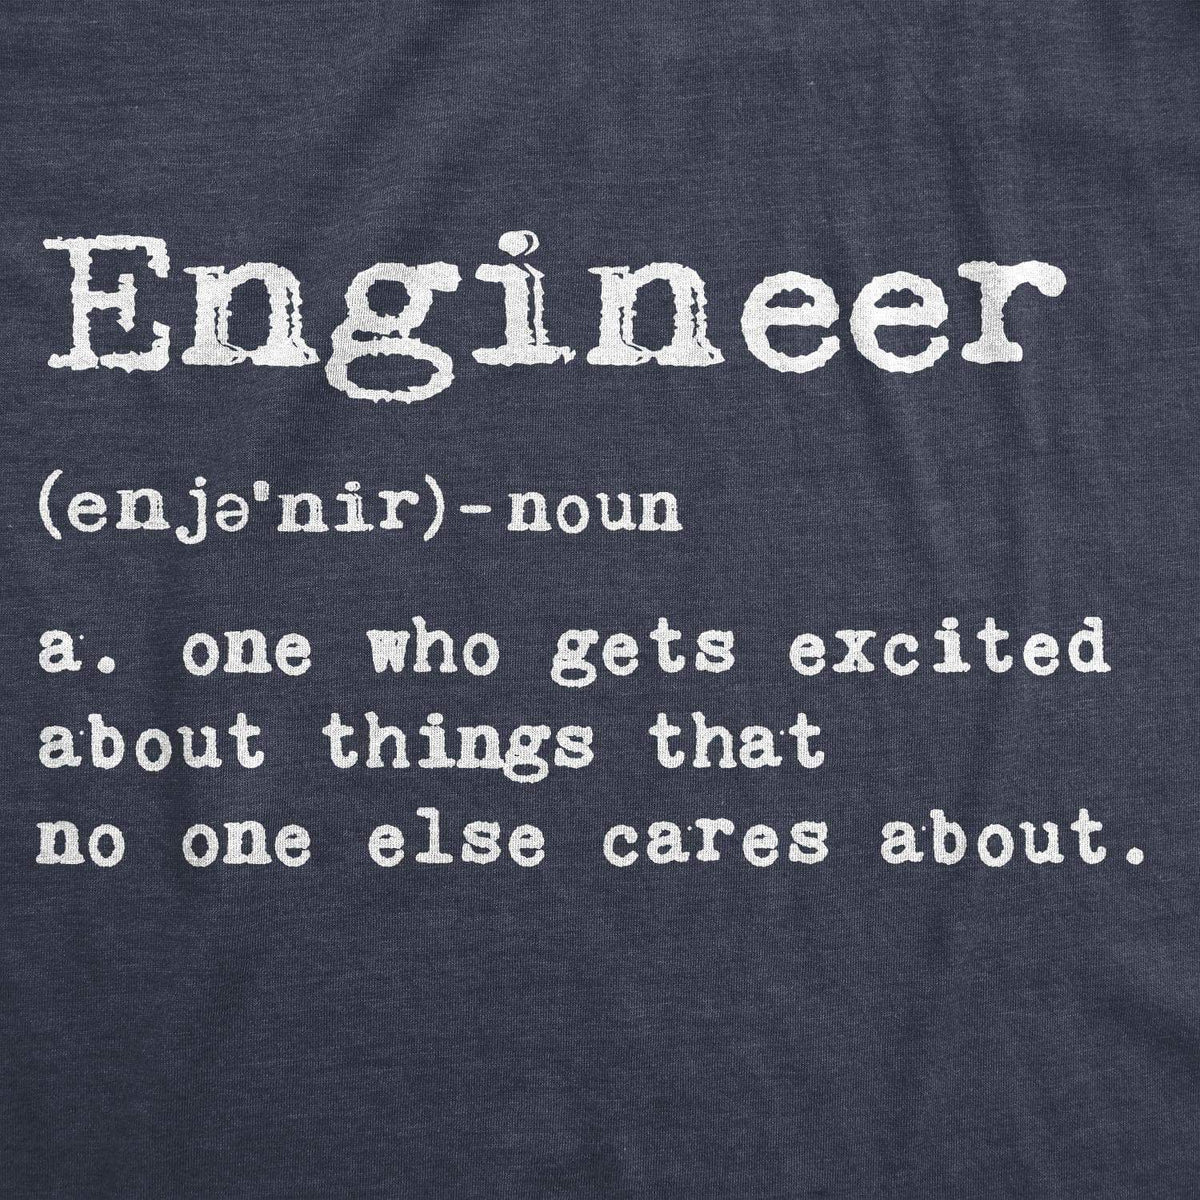 Engineer Definition Men&#39;s Tshirt - Crazy Dog T-Shirts